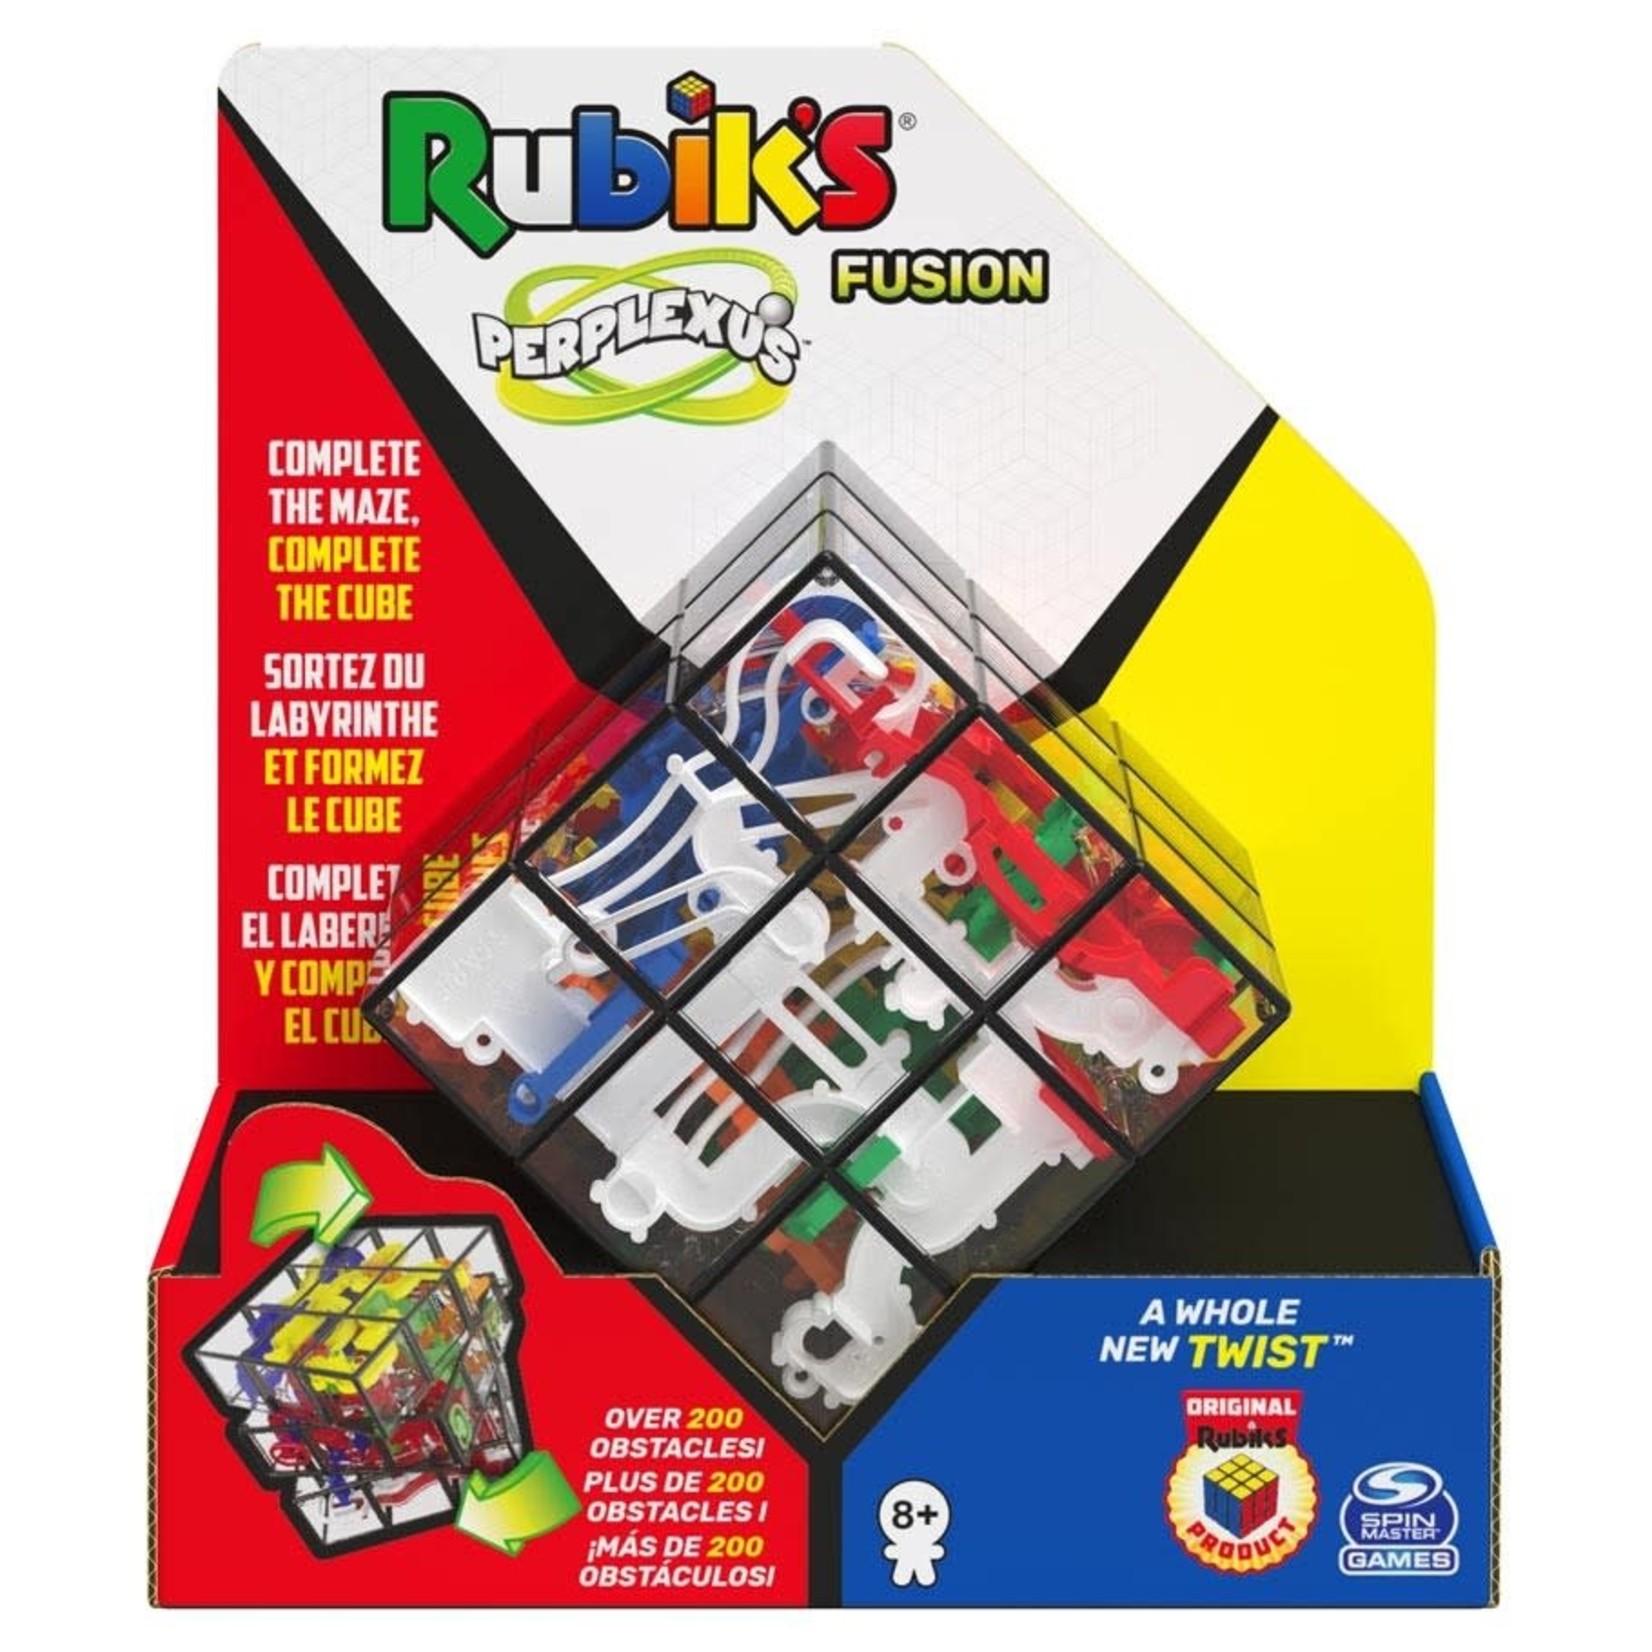 Spinmaster Puzzle: Rubiks Perplexus Fusion 3x3 (2)